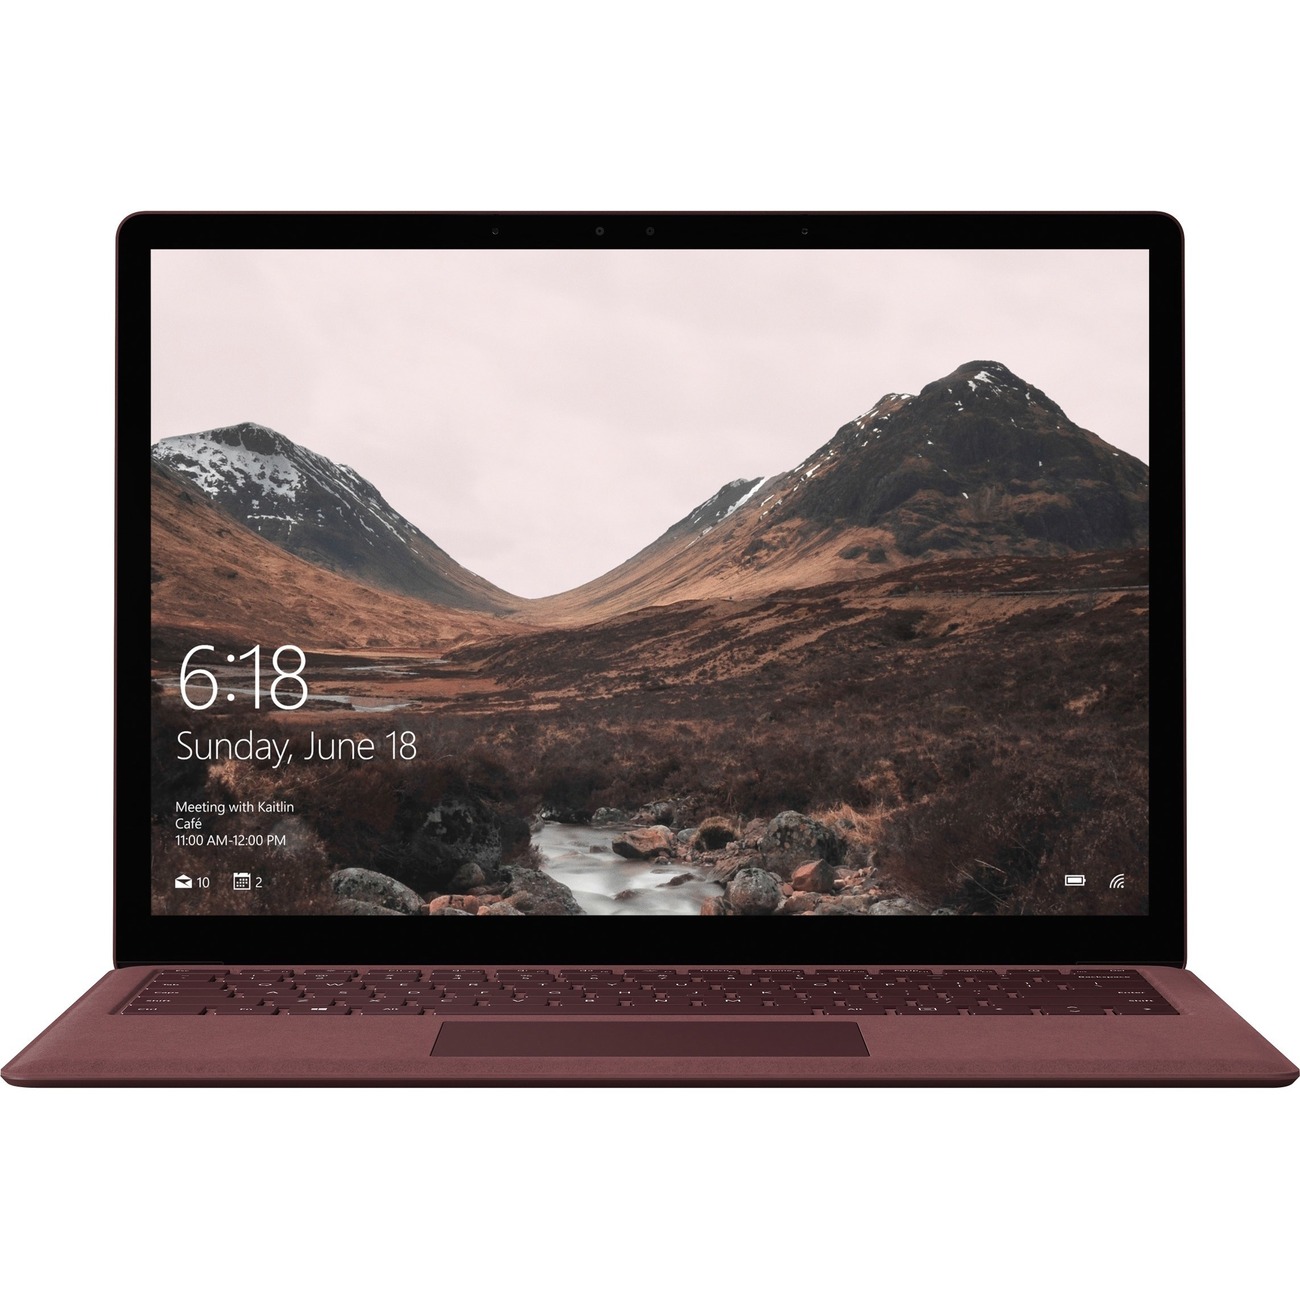 Microsoft Surface Laptop DAL-00037 Intel Core i7 7th Gen 7660U